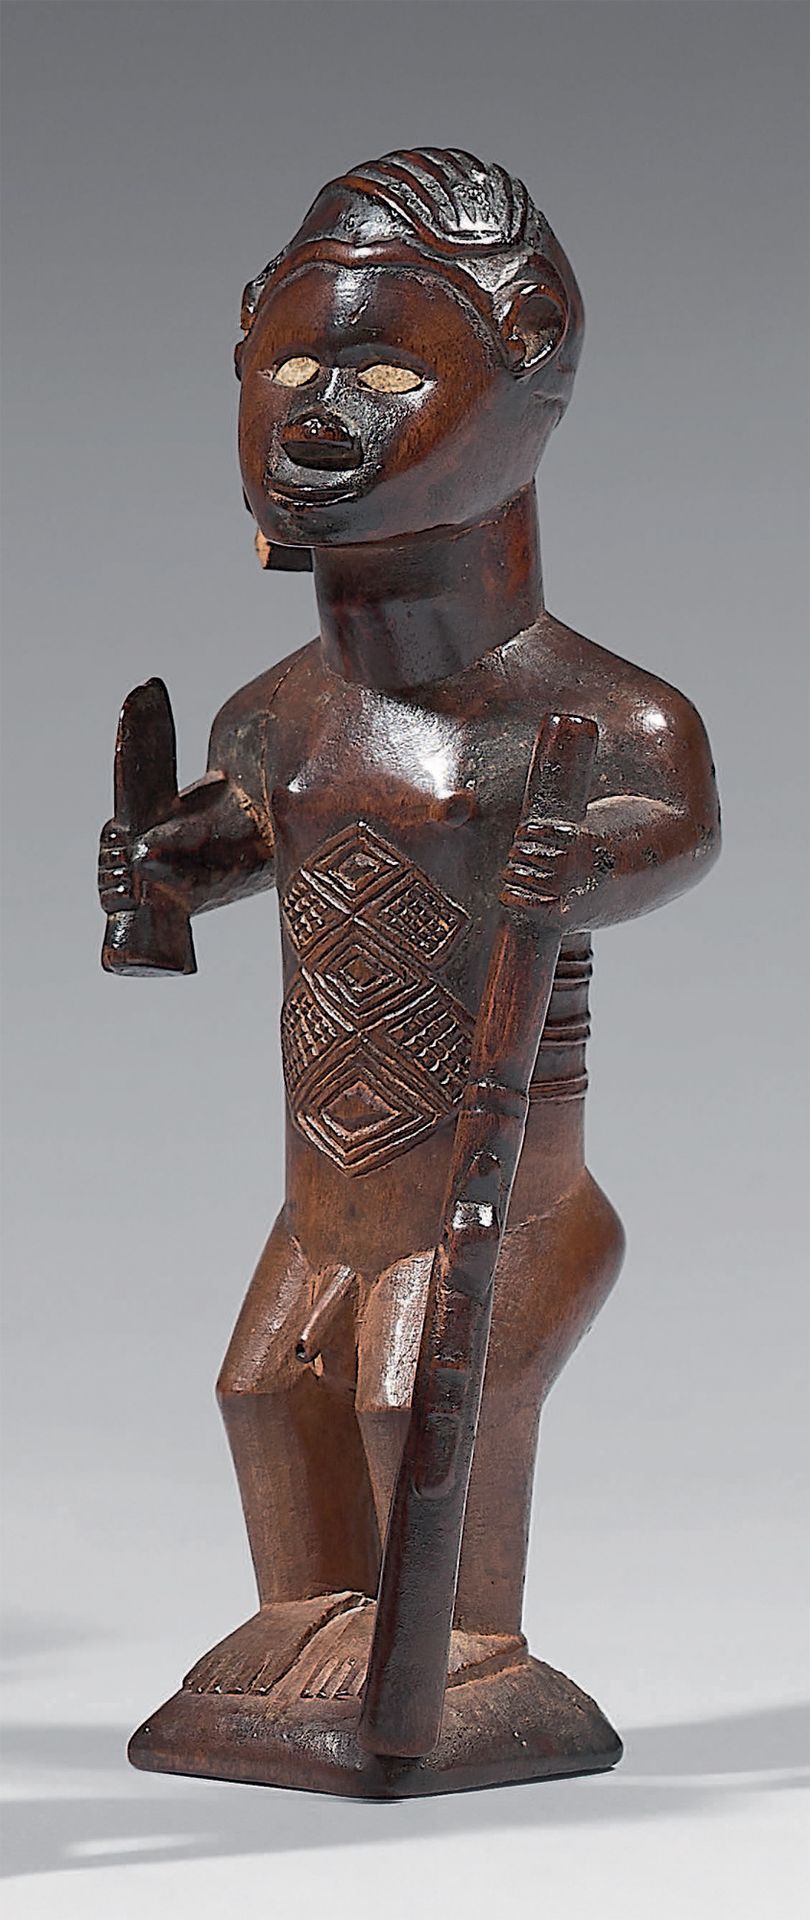 Null Bembe雕像（刚果）
腹部有疤痕的站立男性形象，陶器镶嵌的眼睛拿着一把刀和一支步枪。木质，有使用过的痕迹。
高：17厘米
出处：1996年6月25日&hellip;